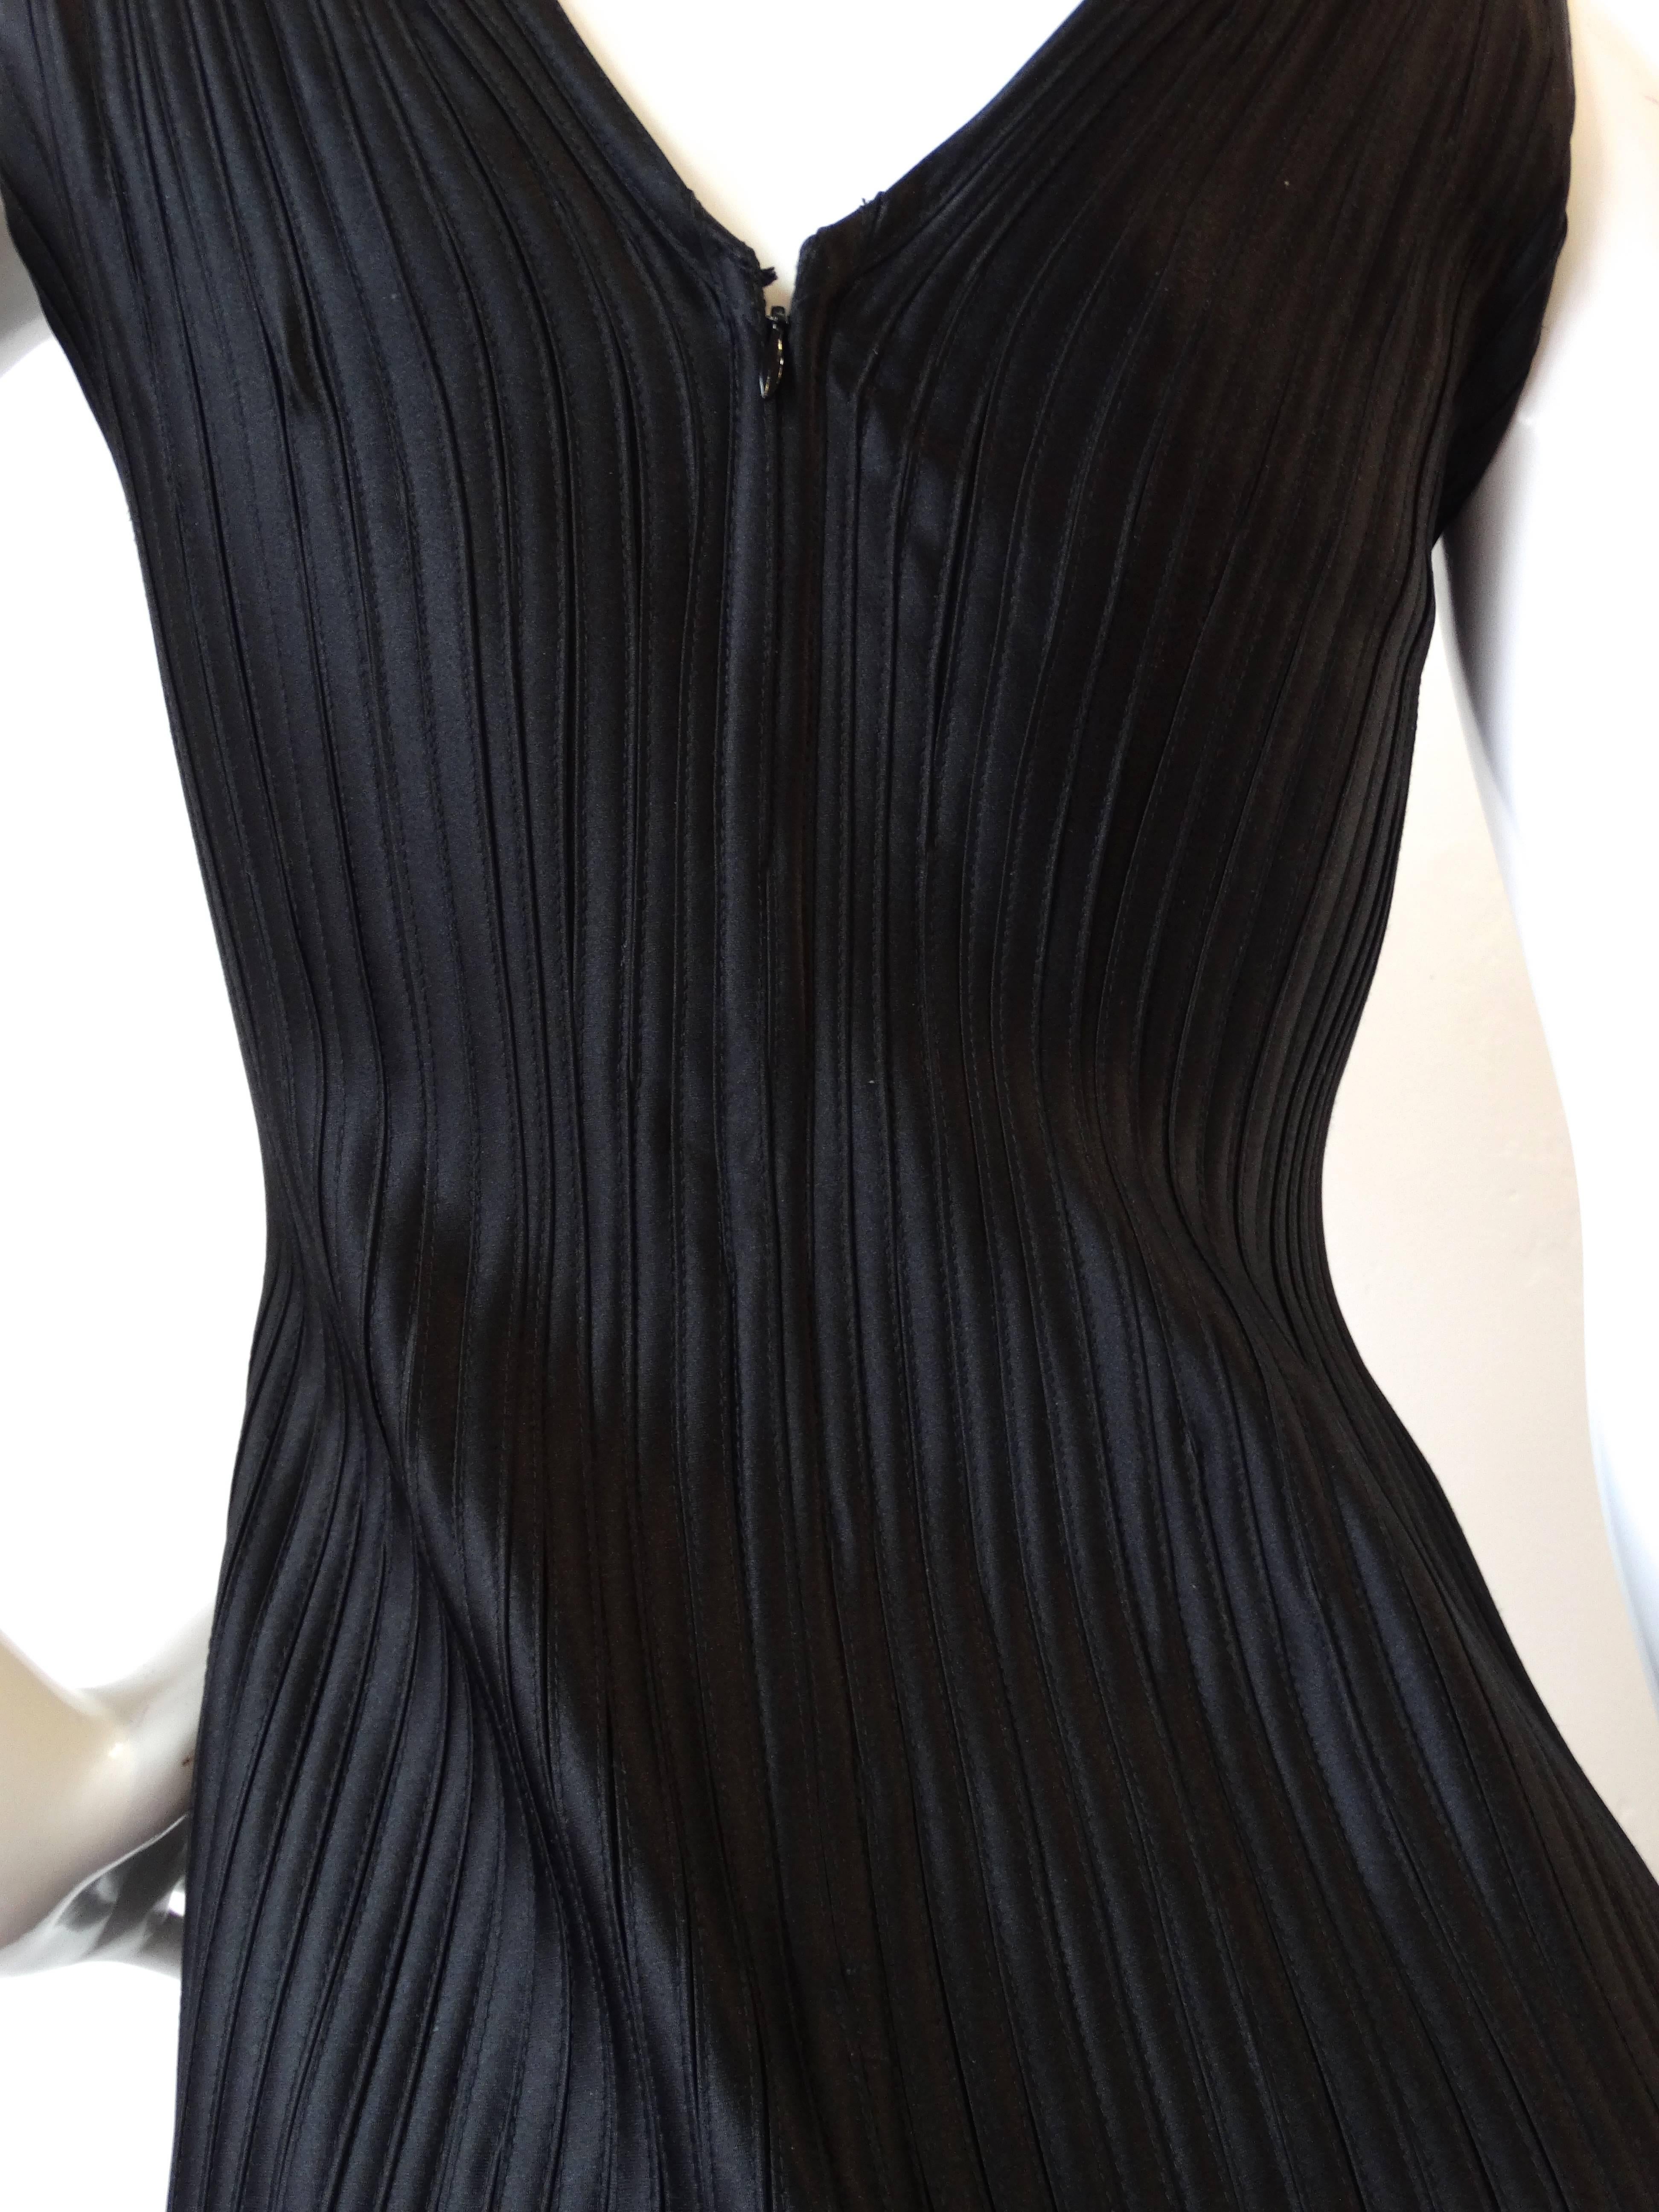 Women's 1980s Black Ribbed Carwash Fringe Cocktail Dress